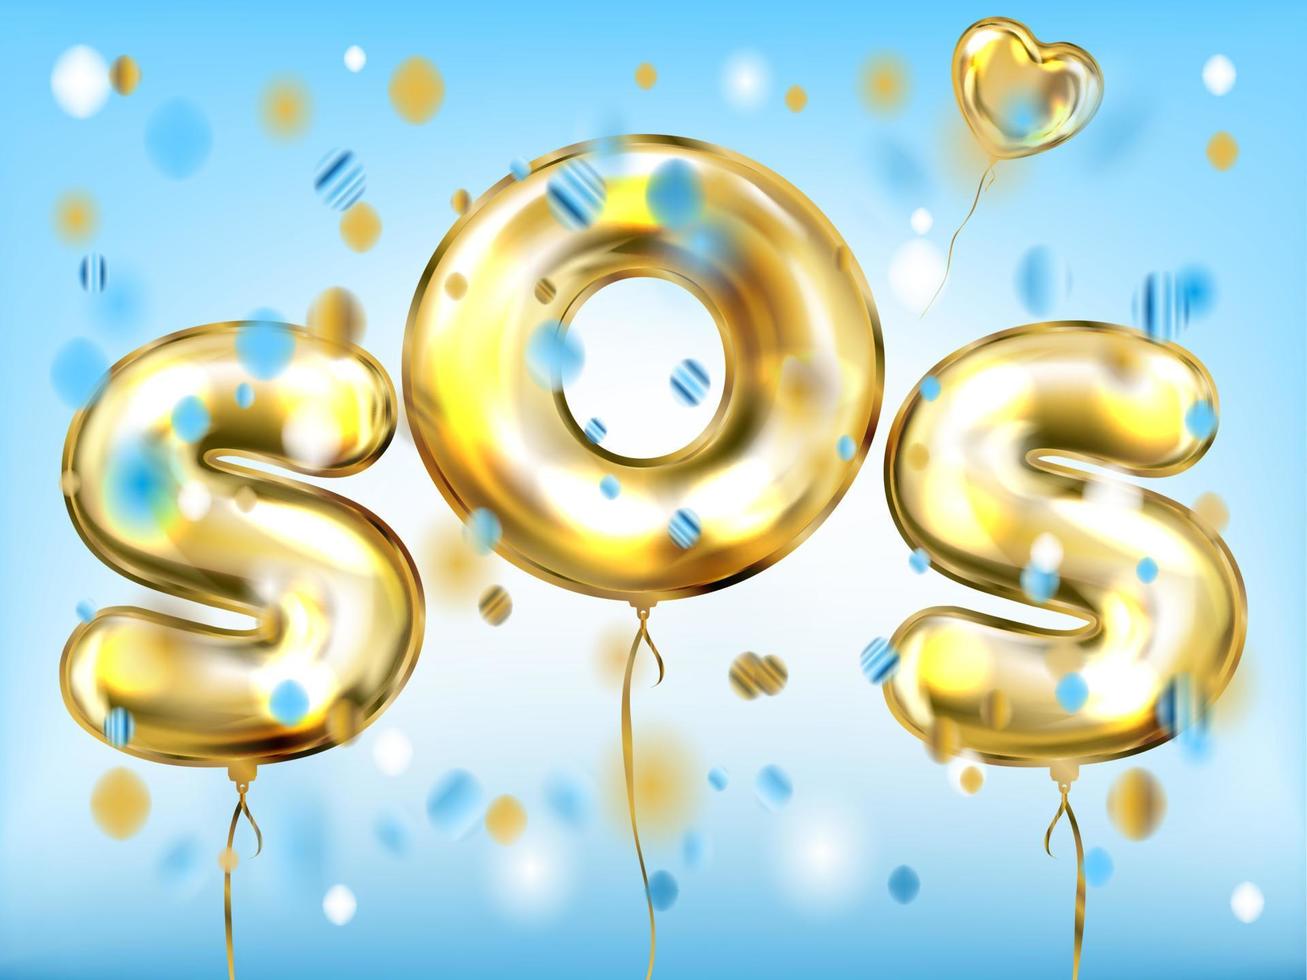 Liebes-SOS-Signalposter mit goldenem Herzballon vektor